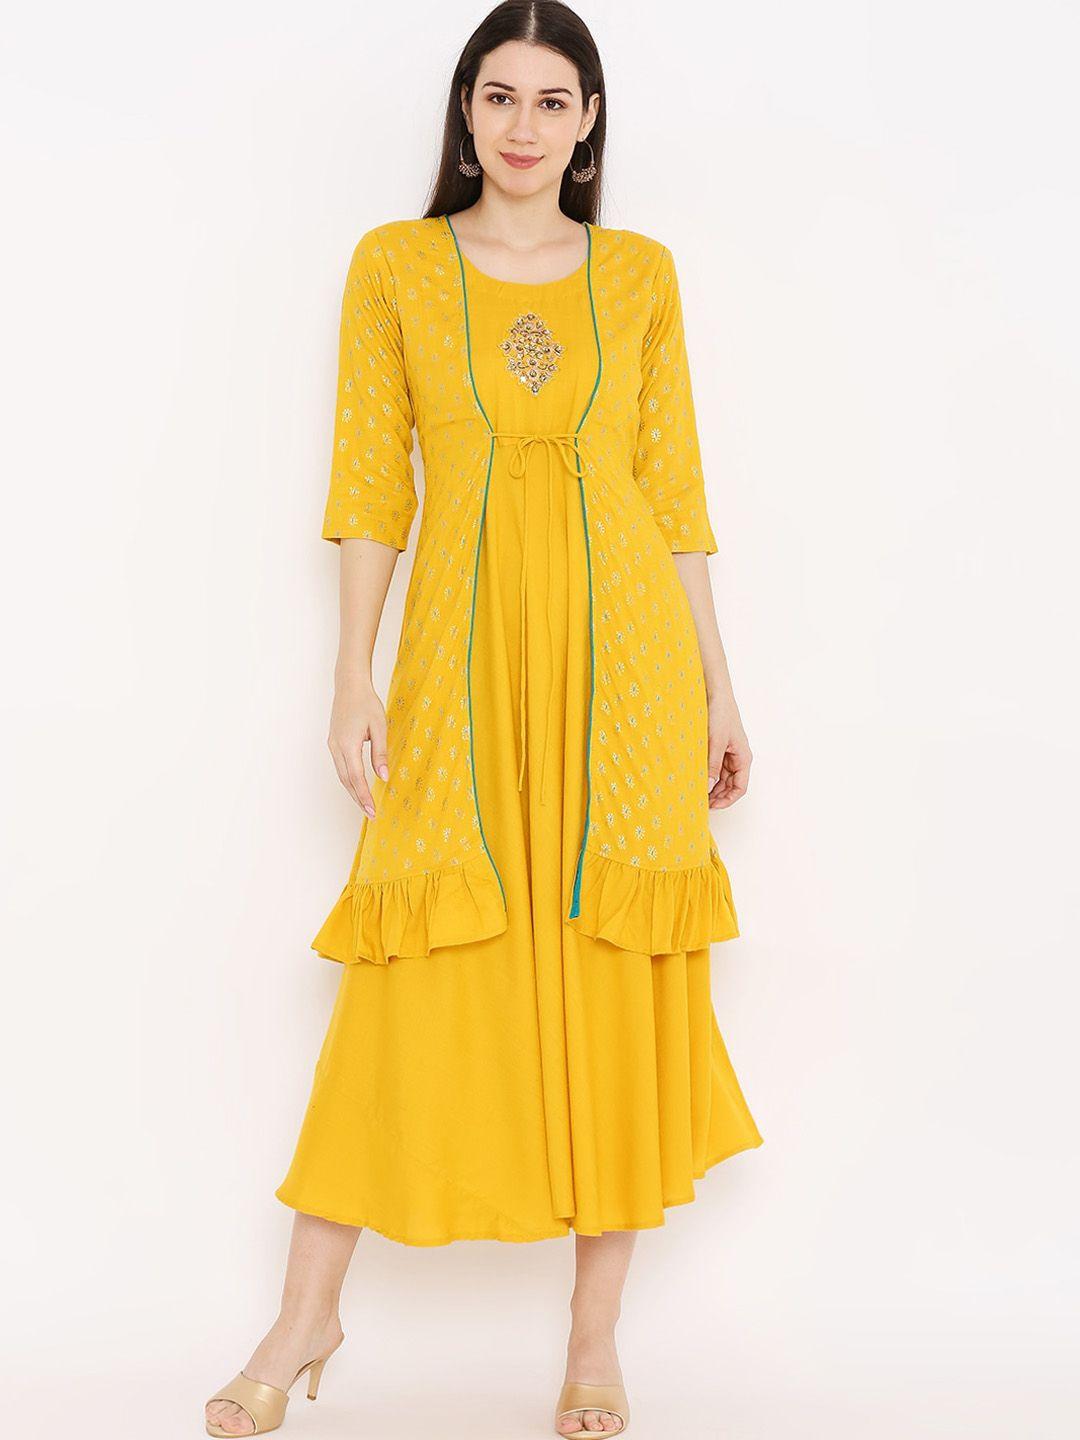 peppertree-yellow-&-golden-ethnic-motifs-layered-ethnic-midi-dress